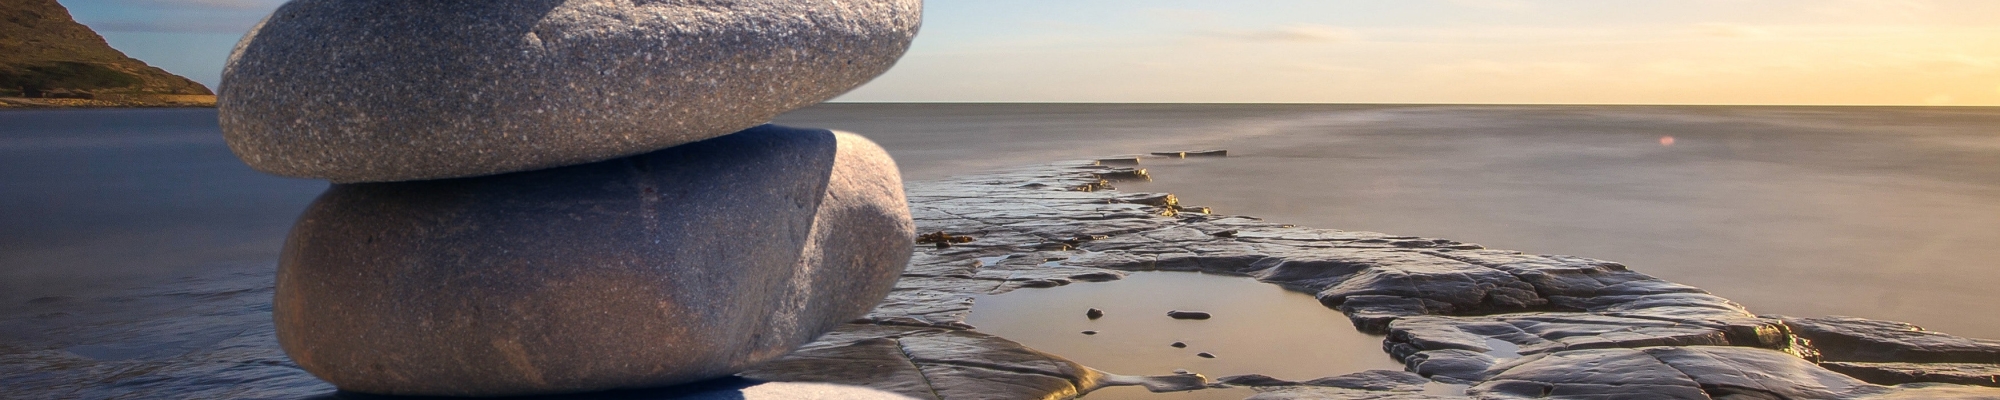 background balance beach boulder 289586